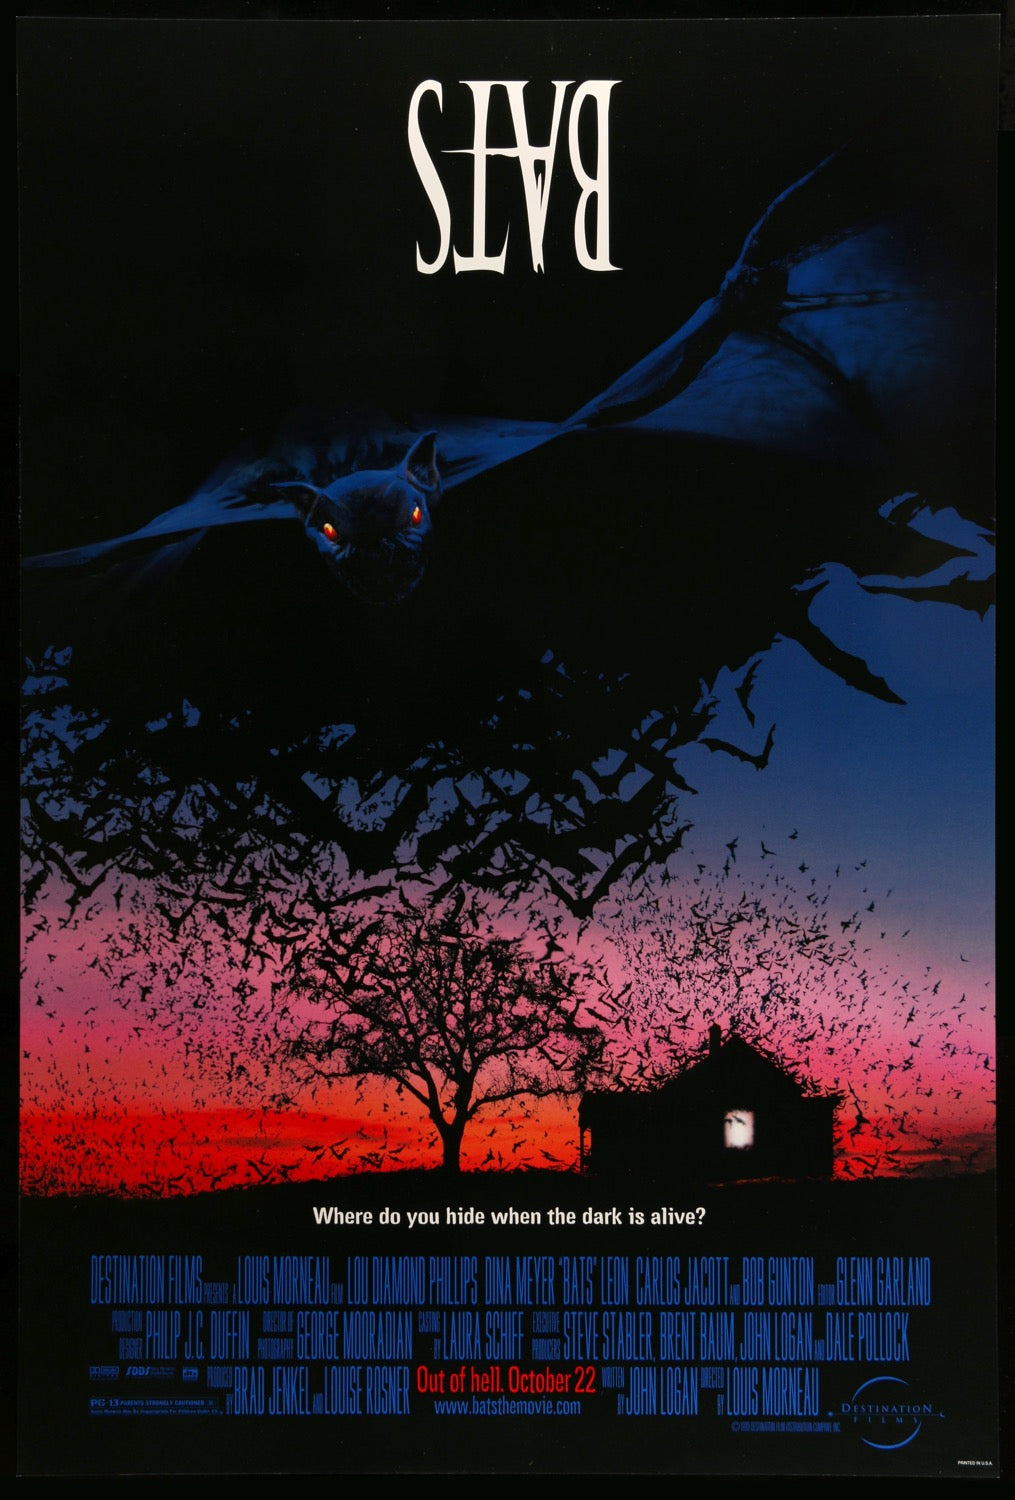 Bats (1999) original movie poster for sale at Original Film Art